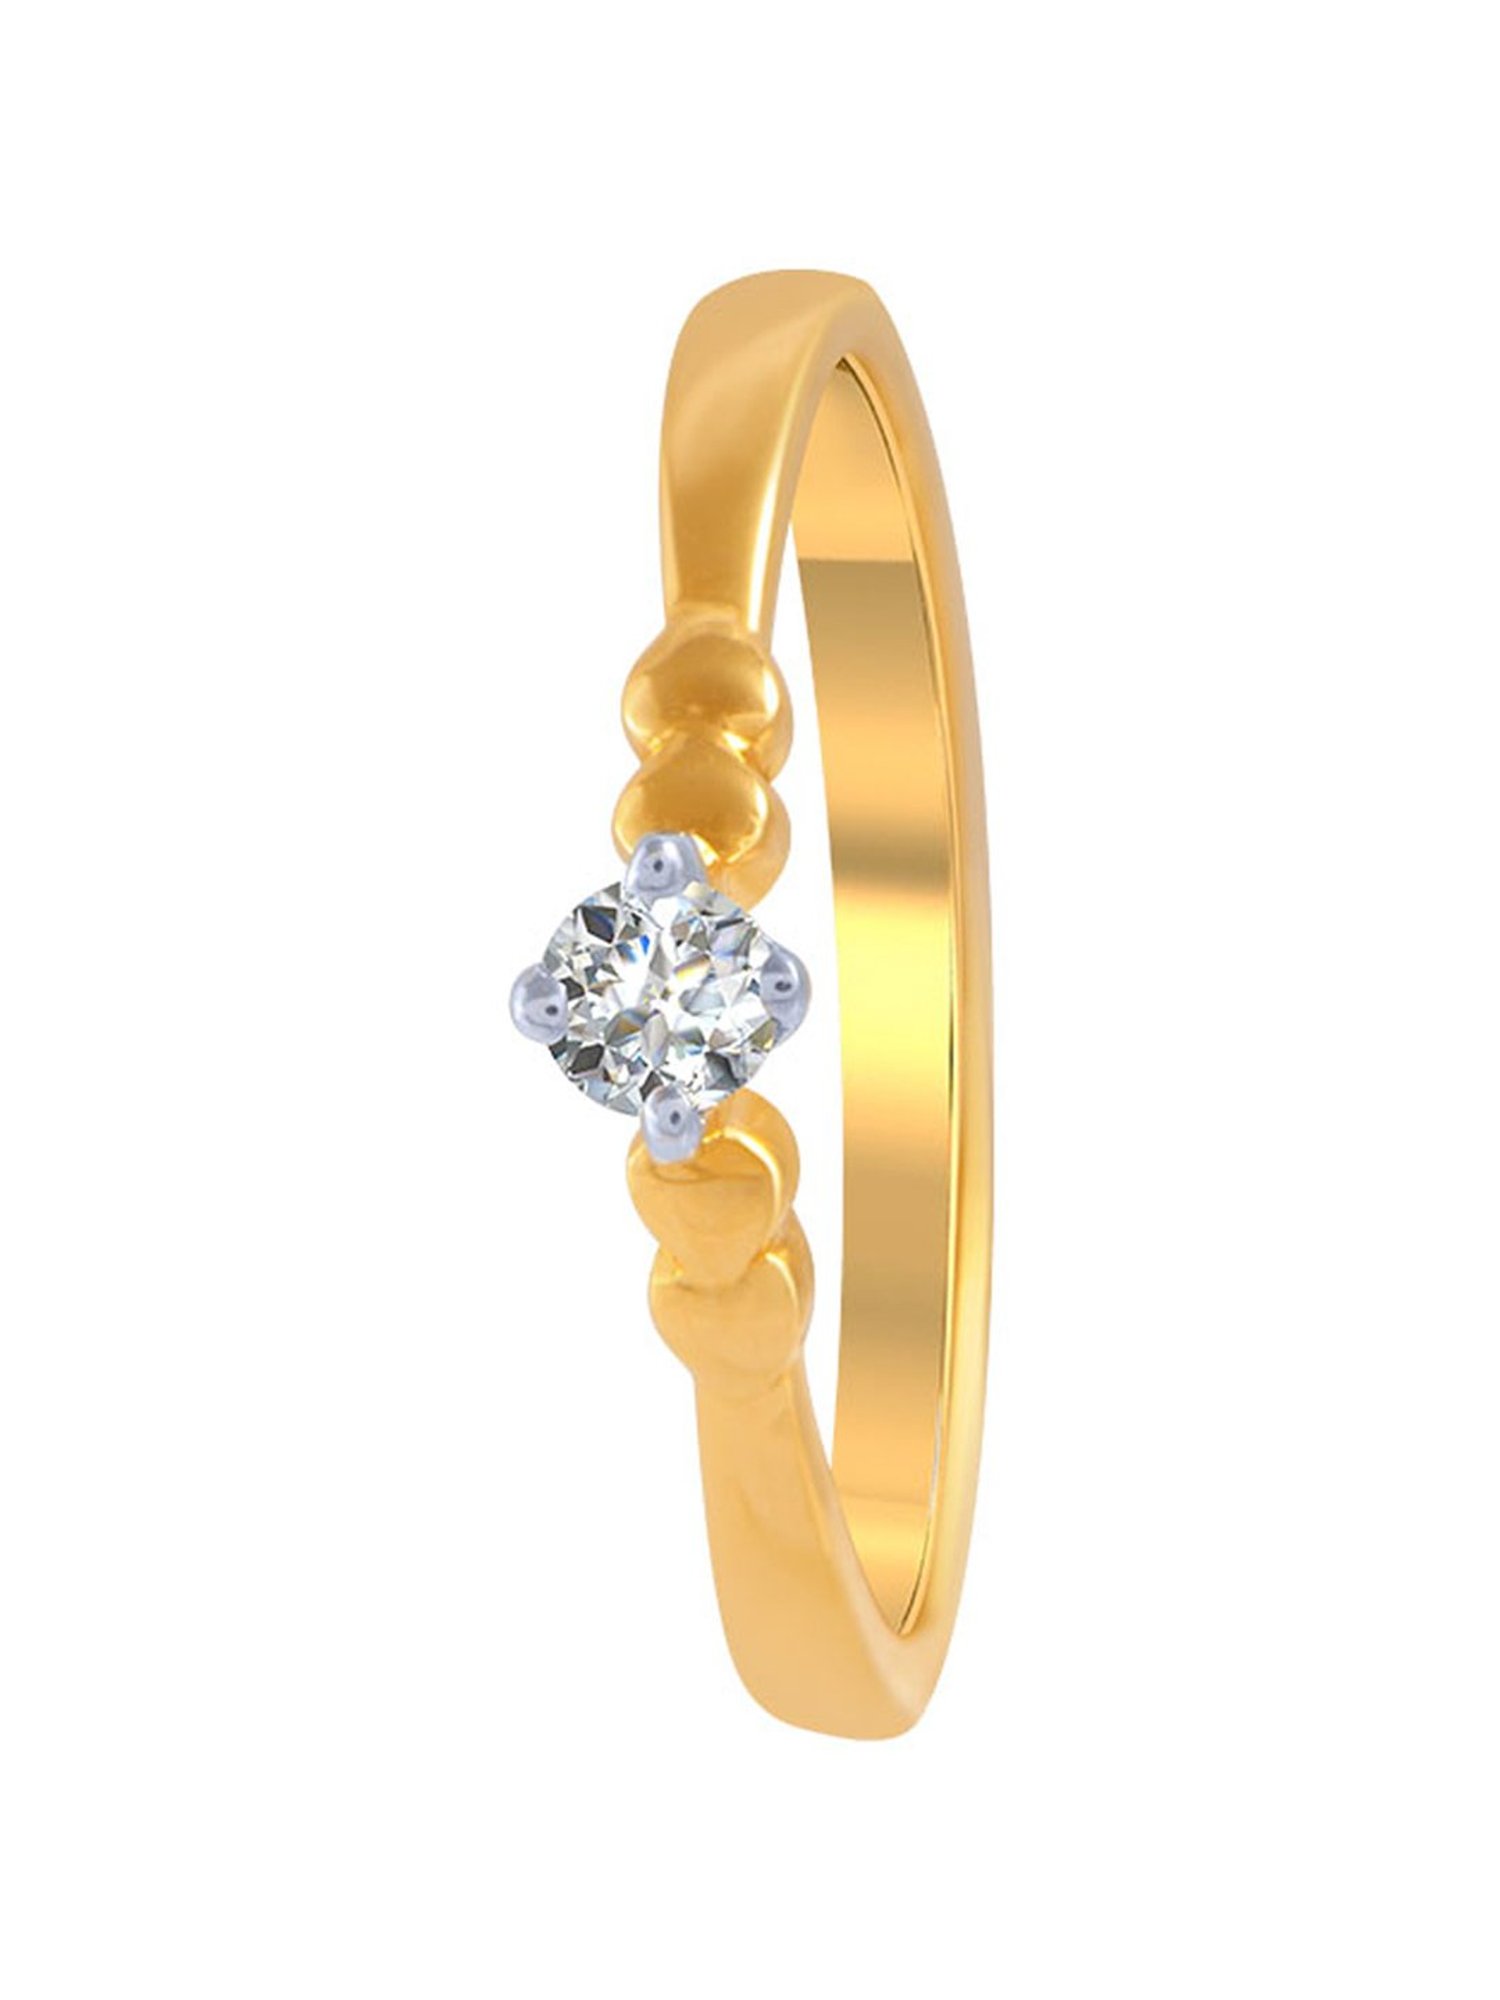 The Fringe Diamond Ring by PC Jeweller